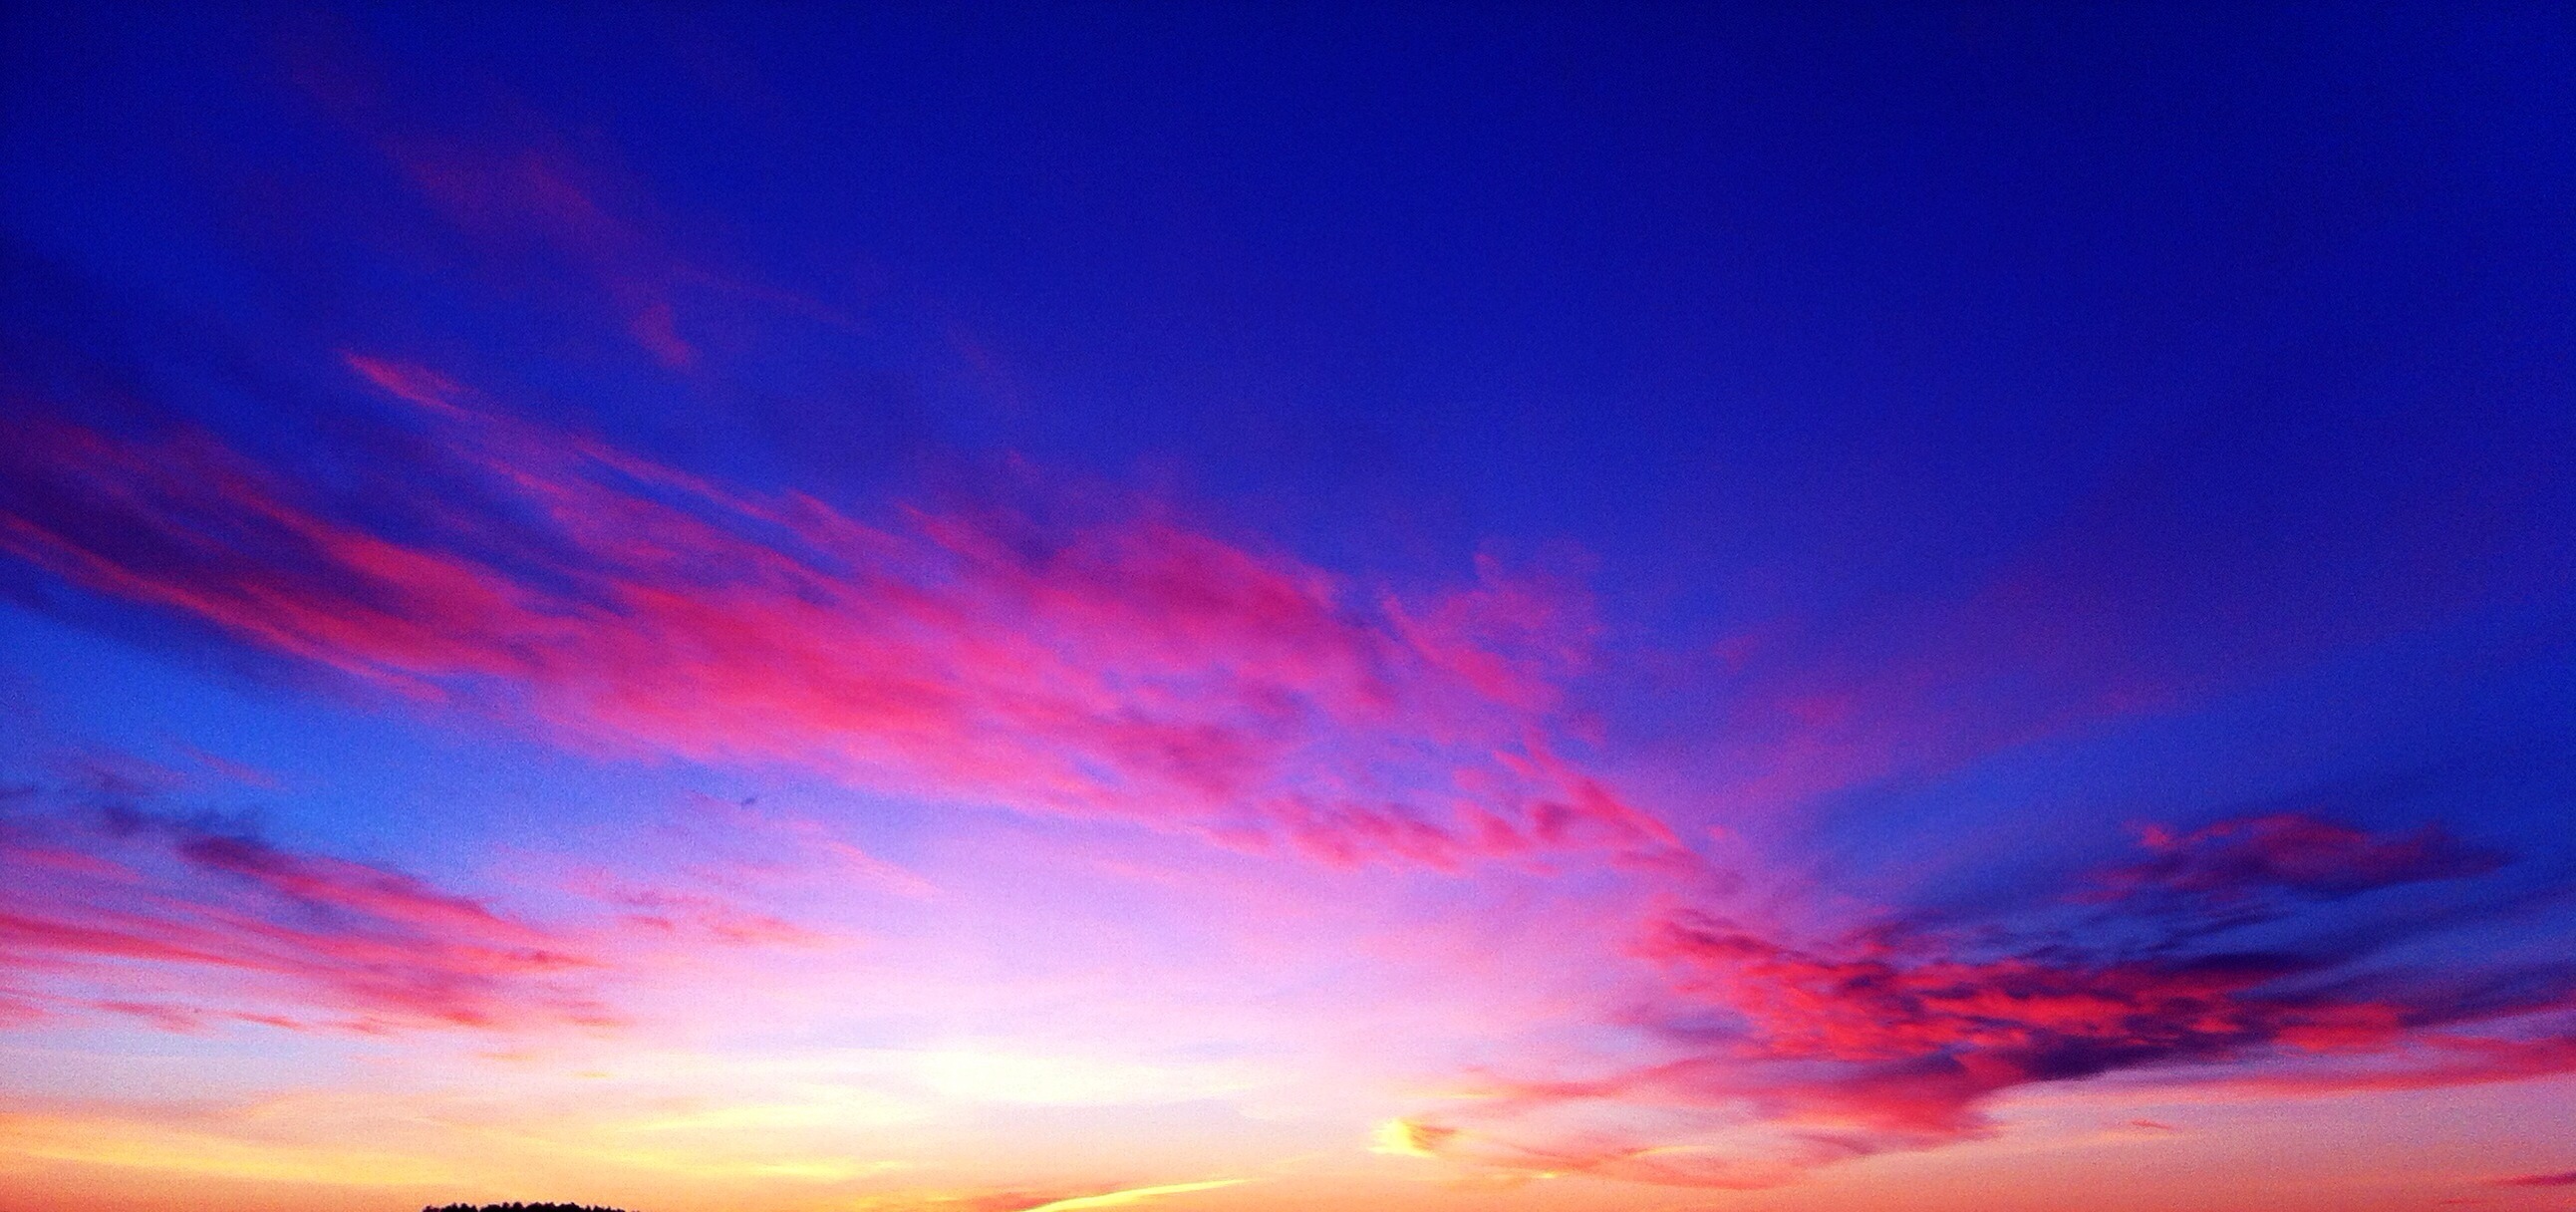 Wallpaper, pink, blue, sunset, sky, orange, cloud, night, clouds, colorful, purple, lovelyclouds 2585x1216